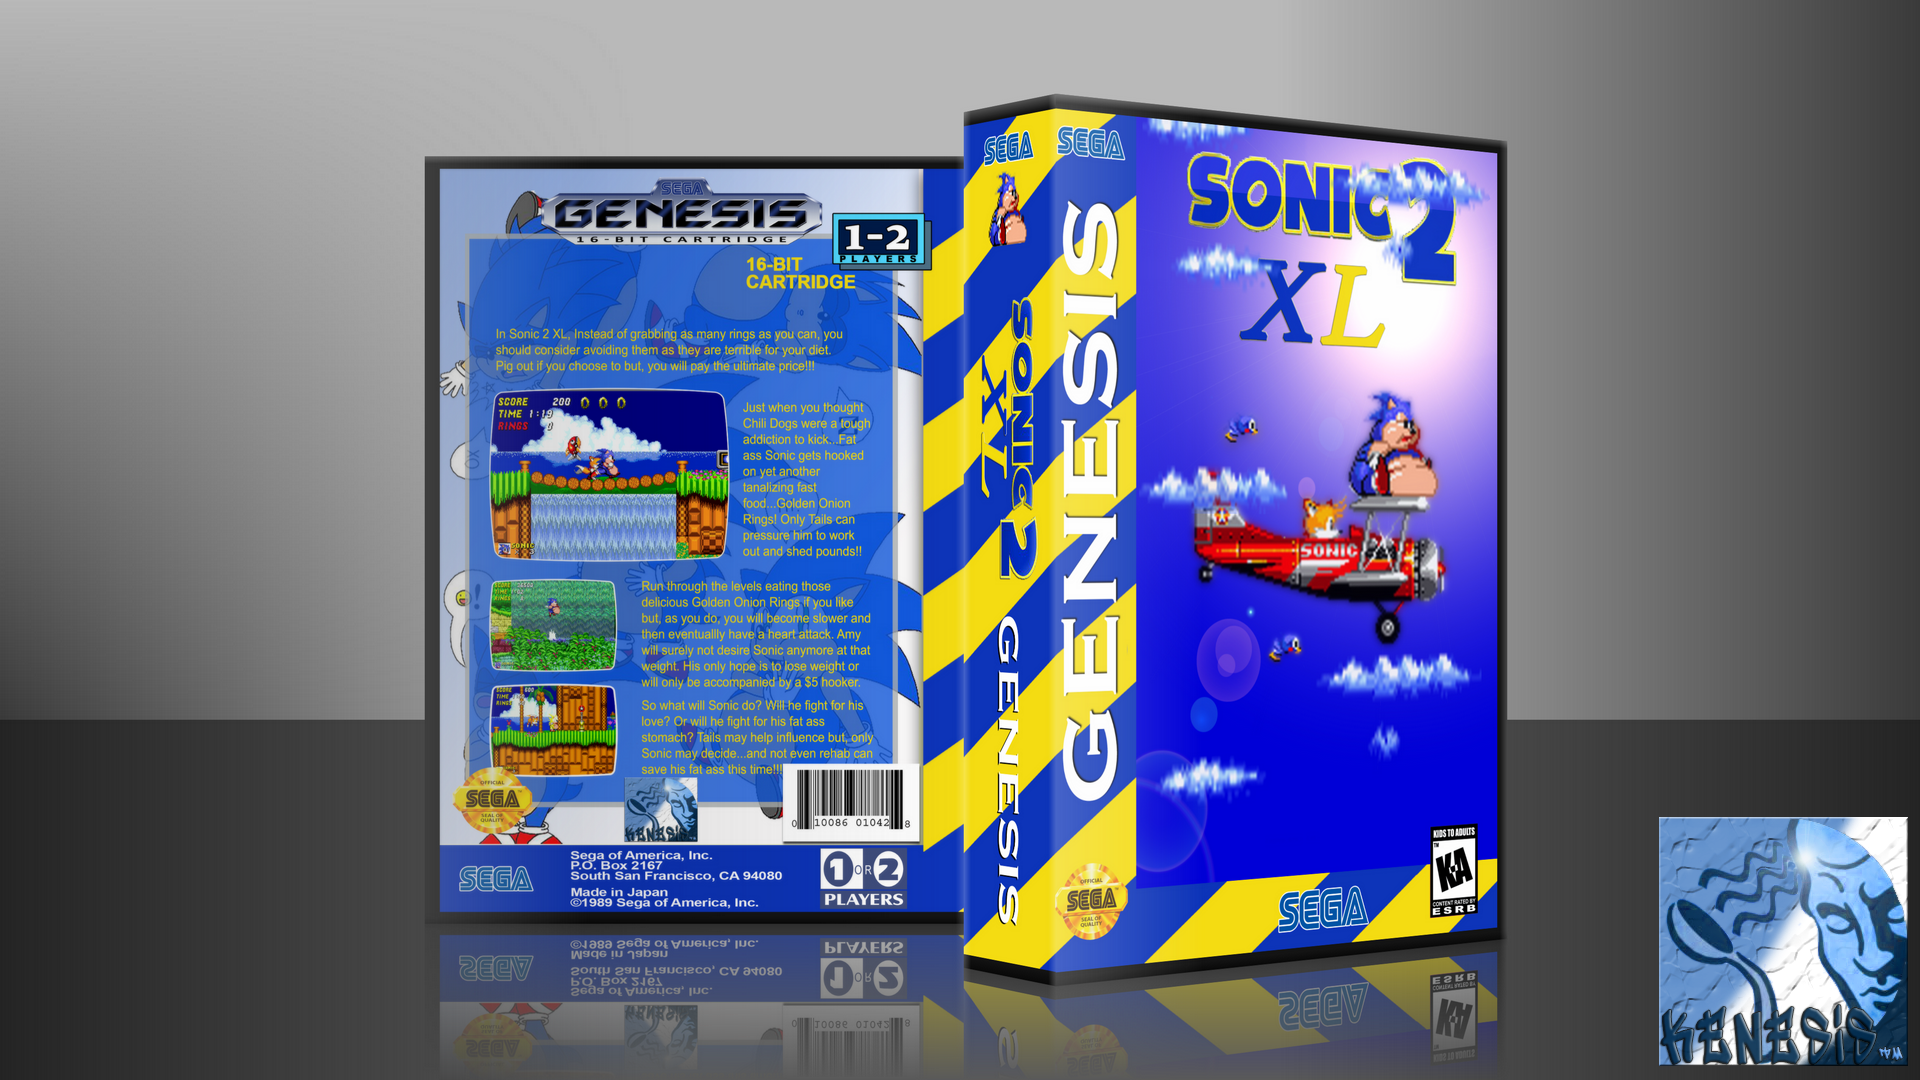 Sonic 2 XL box cover